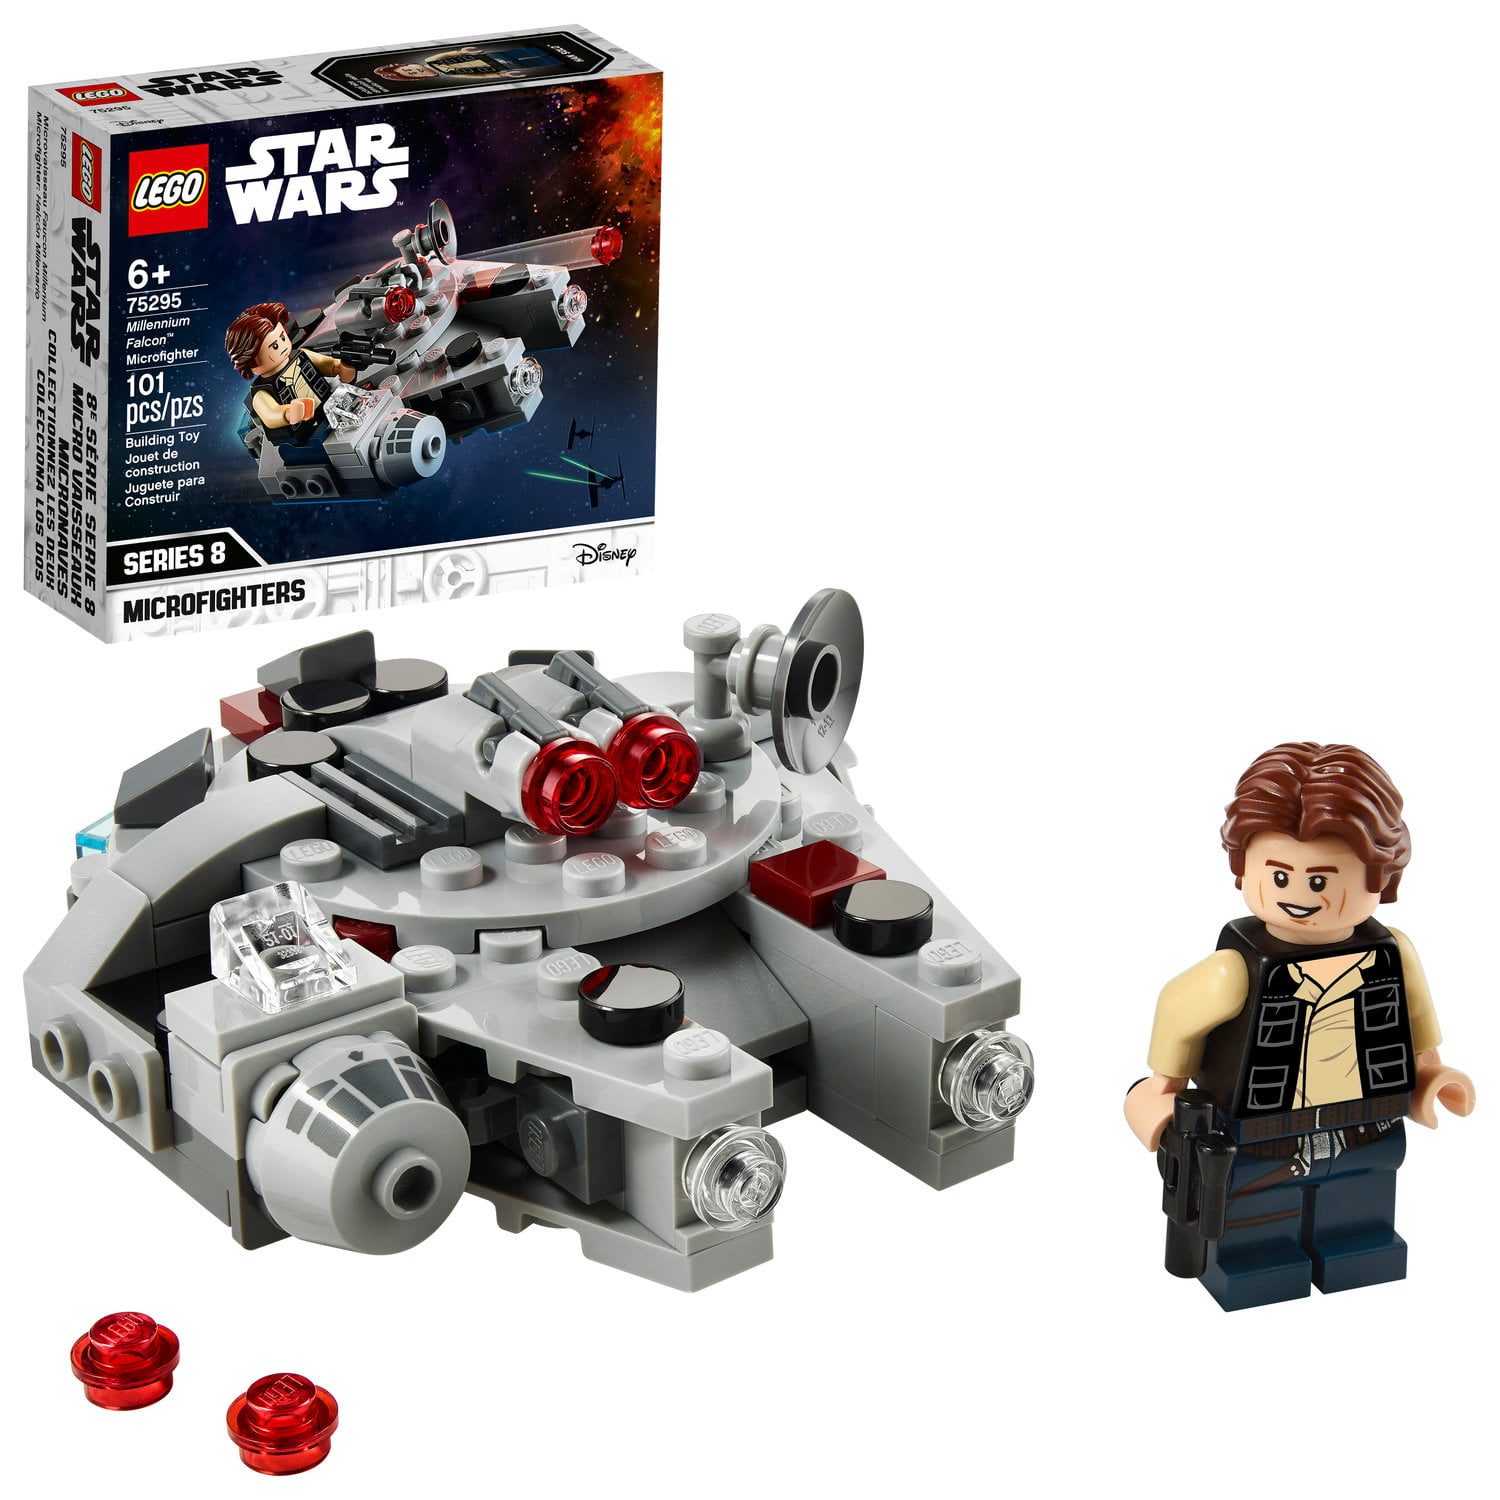 Han Solo Starwars Mini Figures NEW UK Seller Fits Major Brand Blocks 